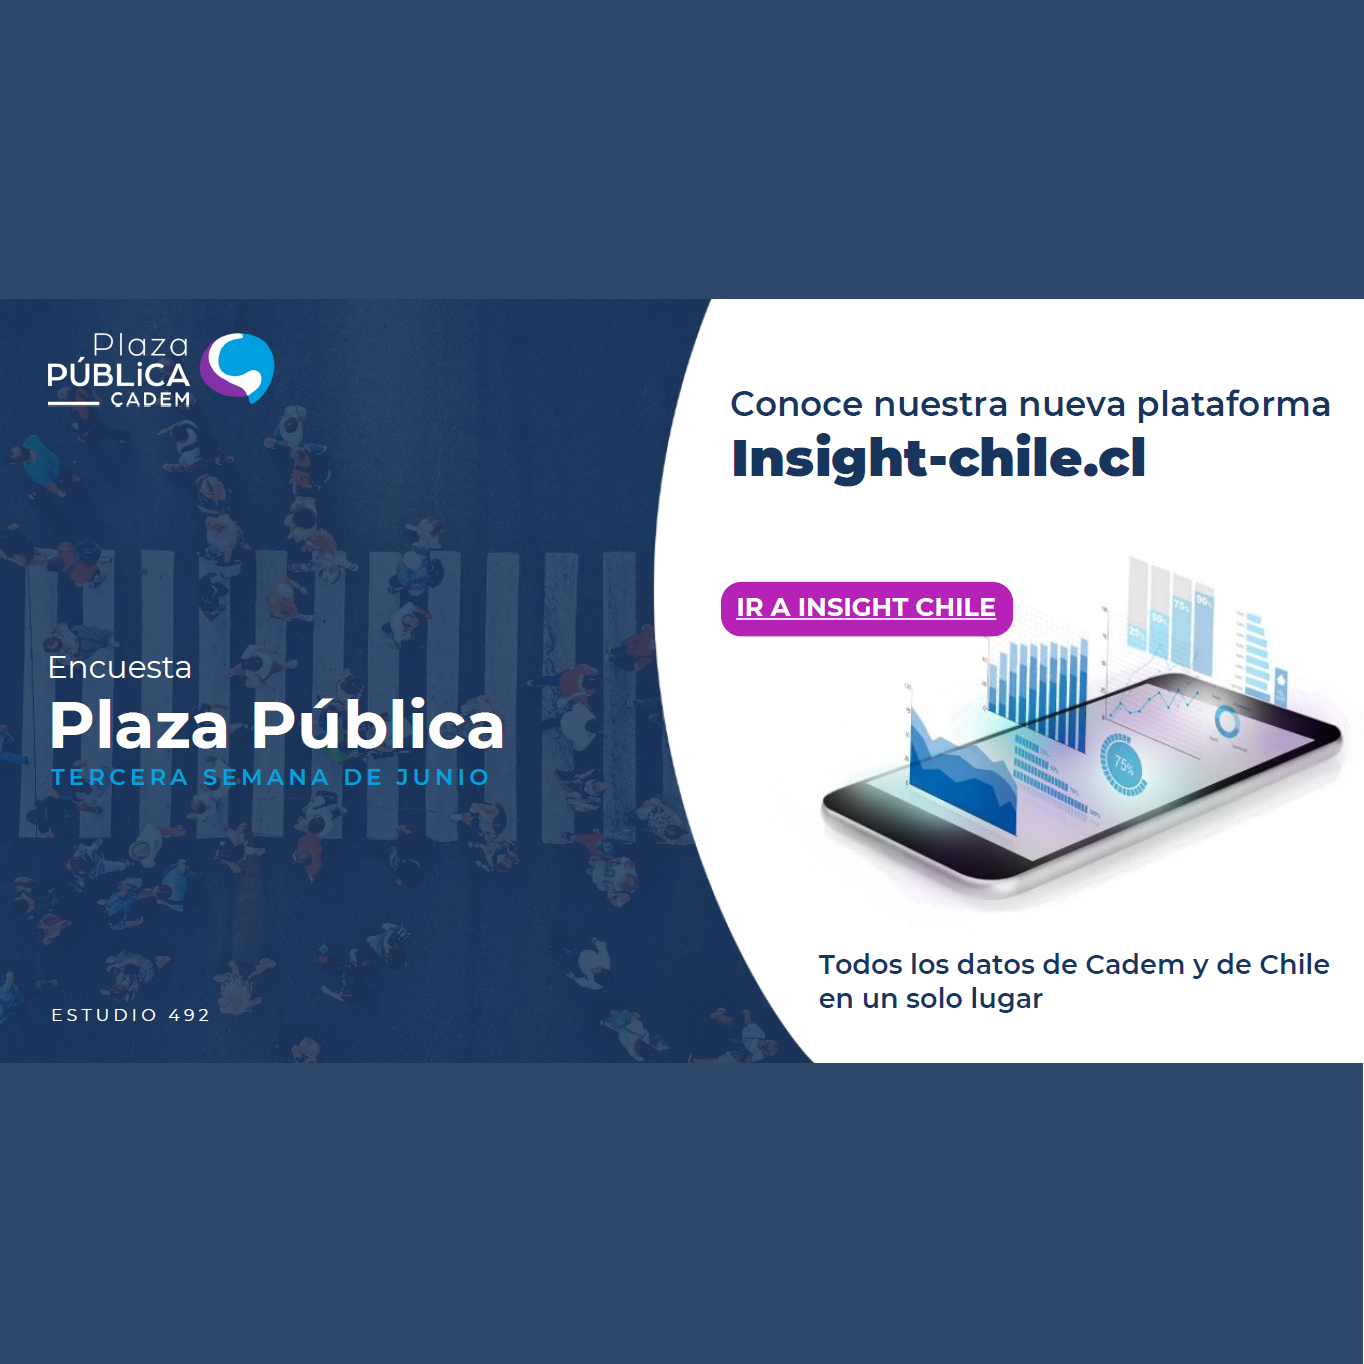 Encuesta Plaza Pública – 3ra semana de junio